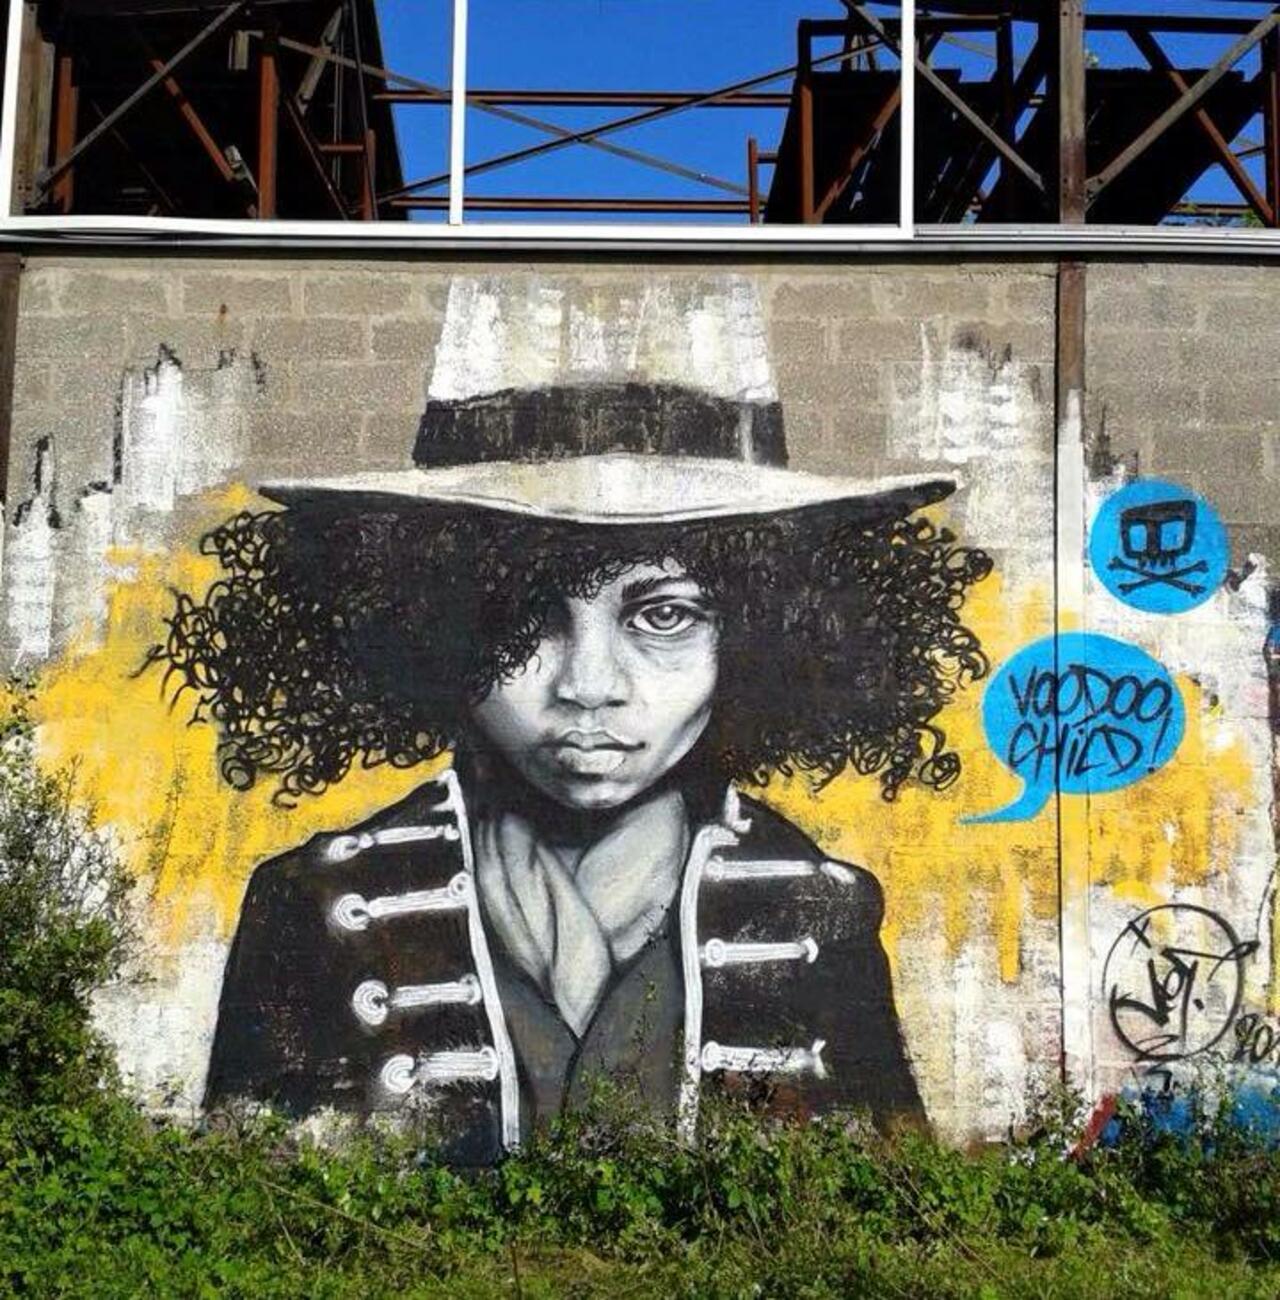 Street Art portrait by Jef 

#art #arte #graffiti #streetart http://t.co/D2uejFU6I1